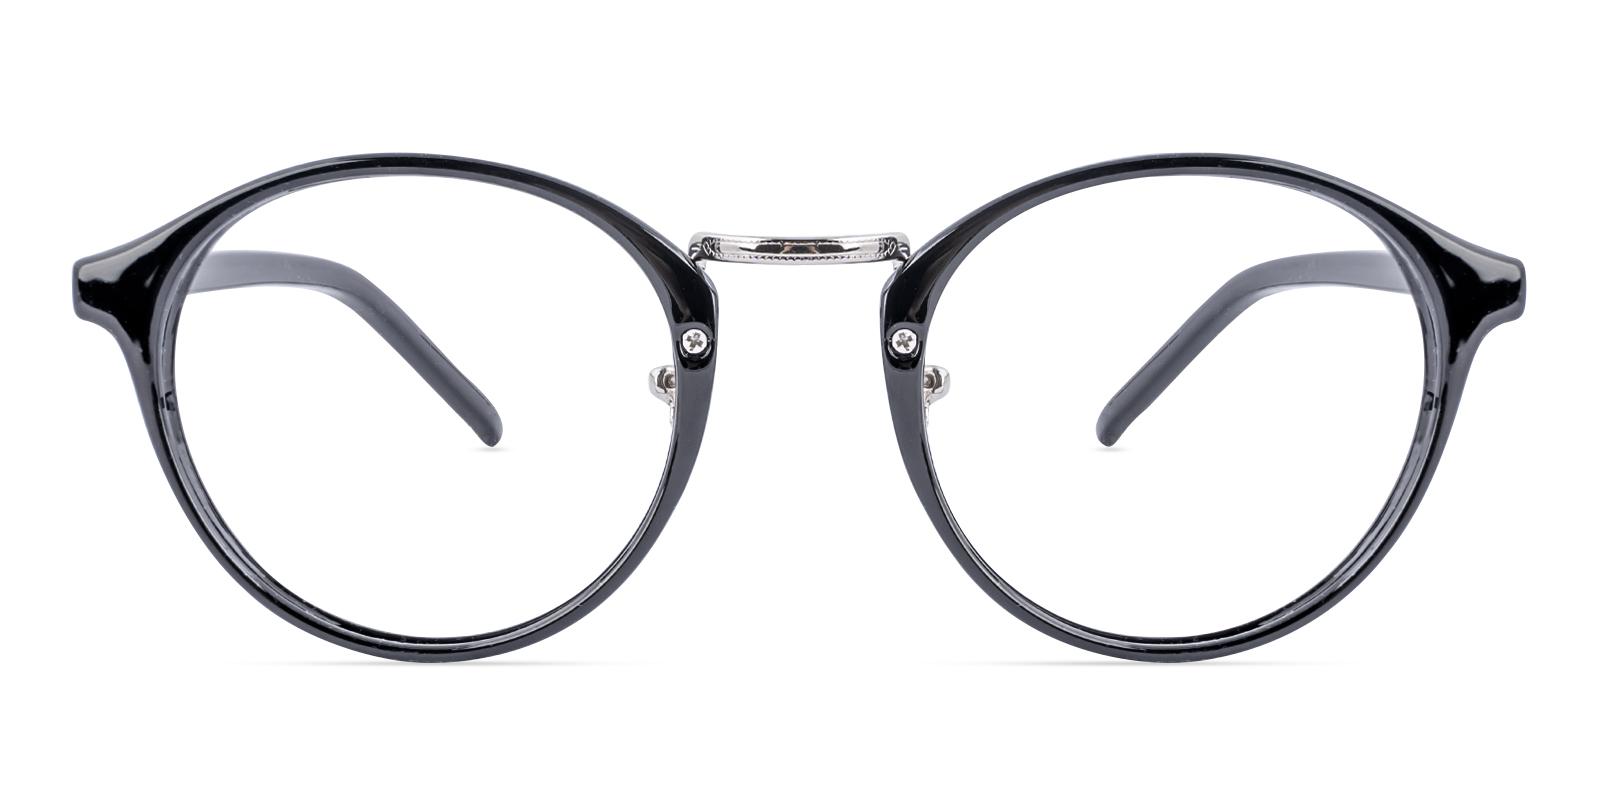 Youngitive Black Plastic Eyeglasses , NosePads Frames from ABBE Glasses